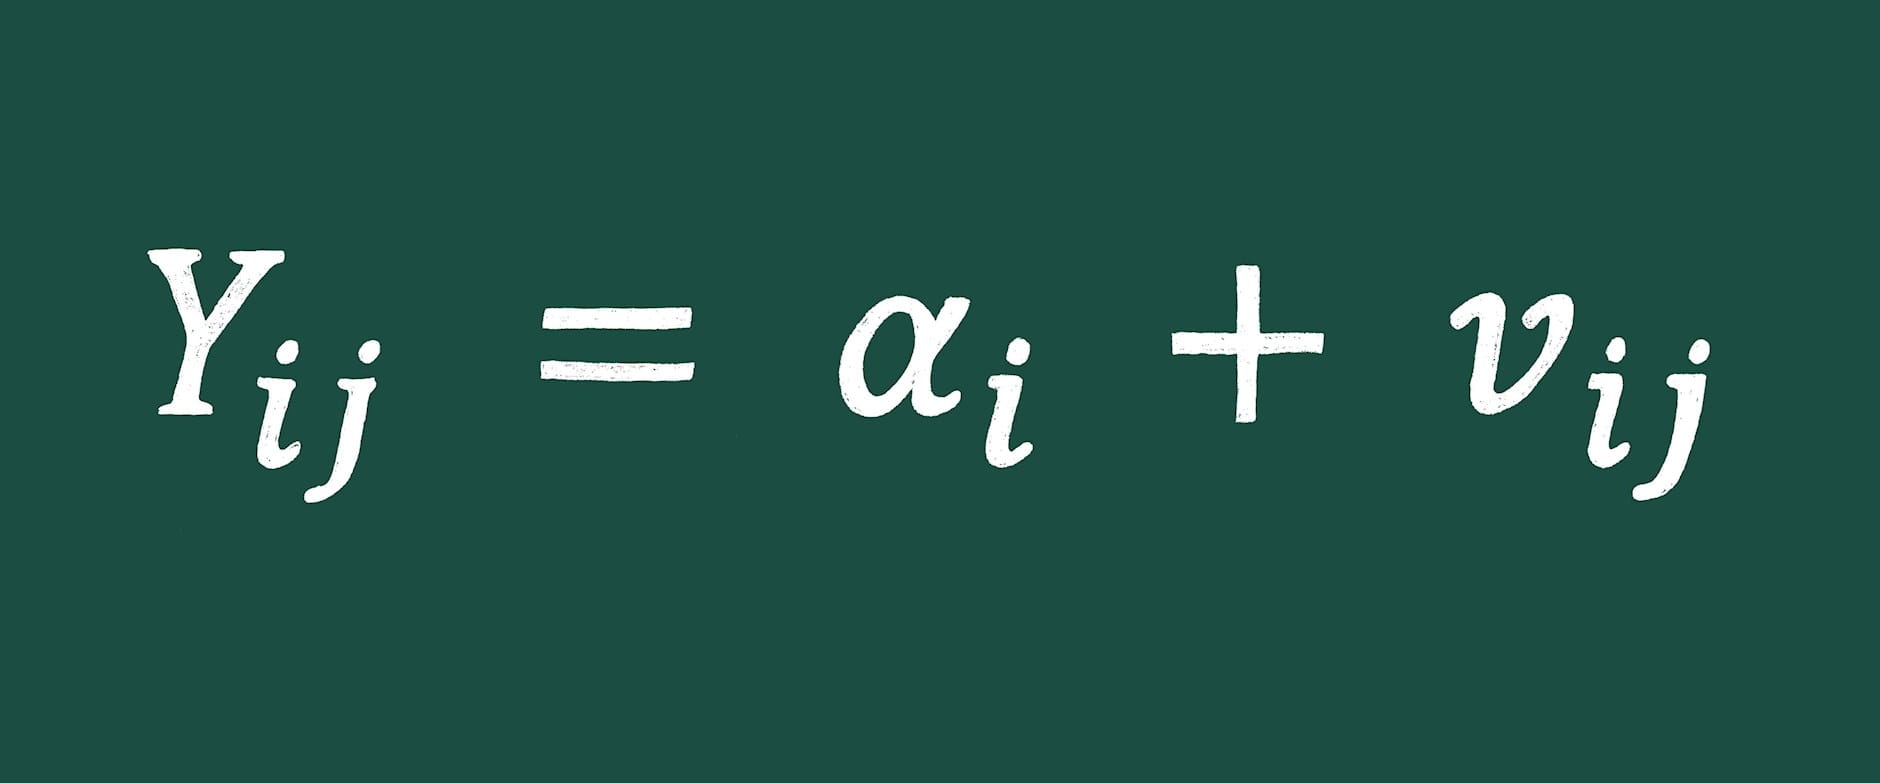 Academic equation written in chalkboard style